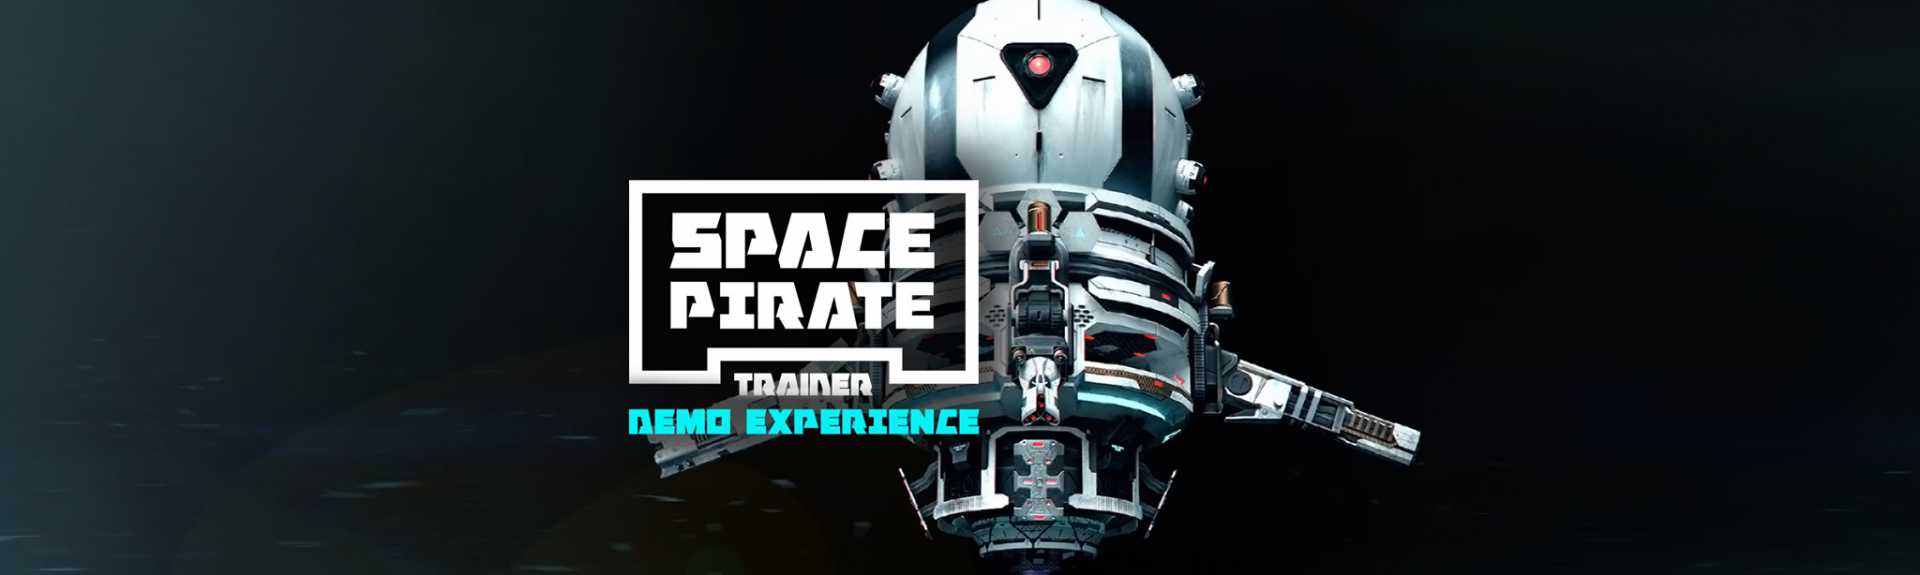 Space Pirate Trainer - Demo